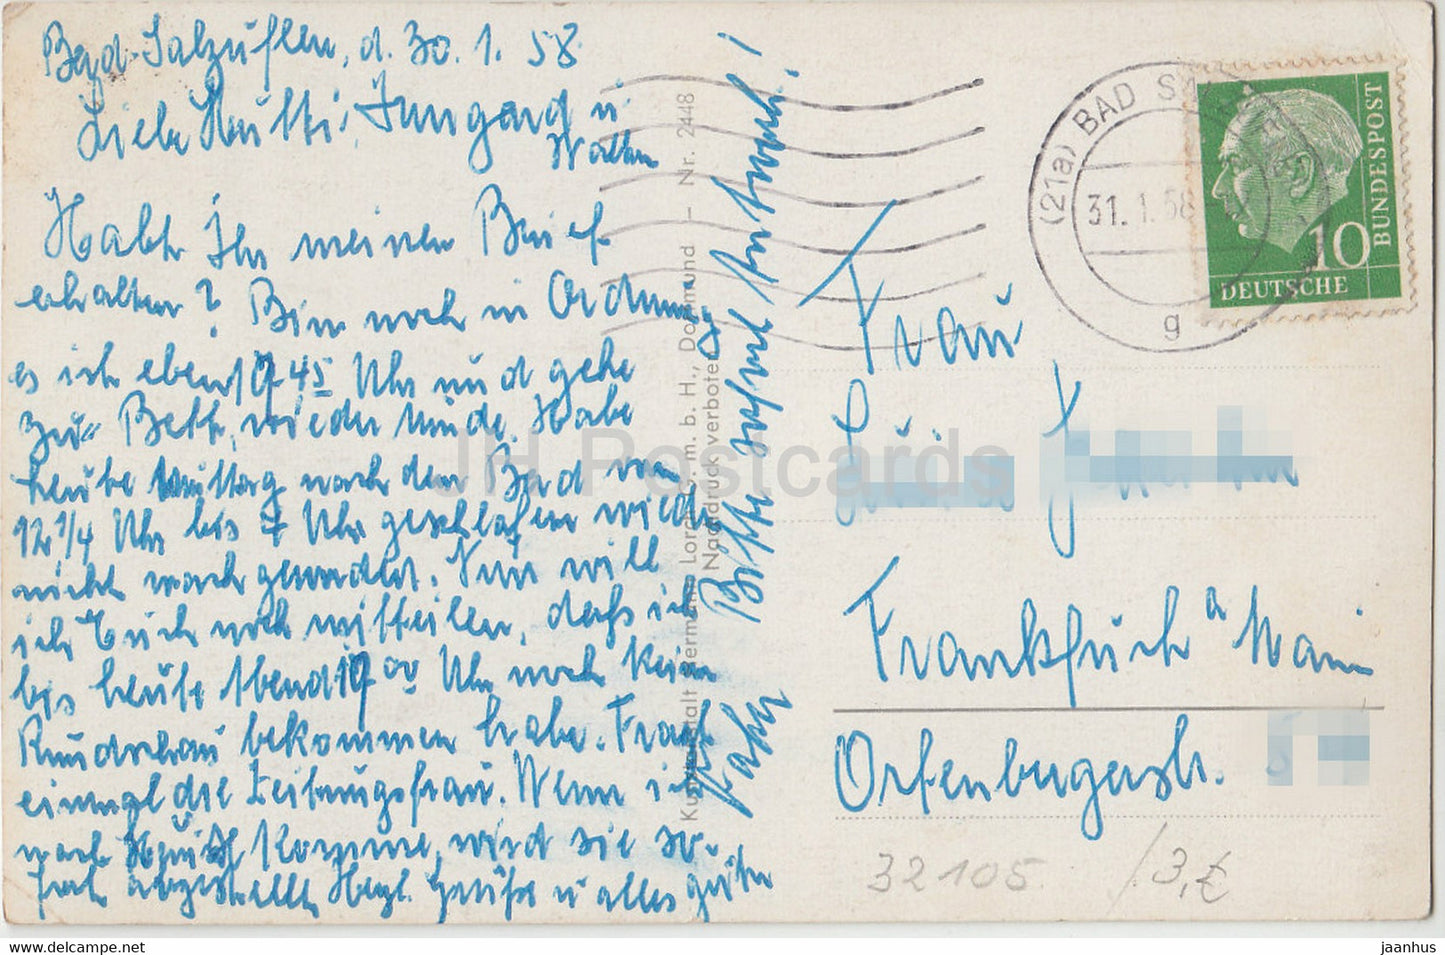 Bad Salzuflen - Kurhaus - Kurpark - Leuchtfontane - Leopoldsprudel - Schwaghow - carte postale ancienne - 1958 - Allemagne - utilisé